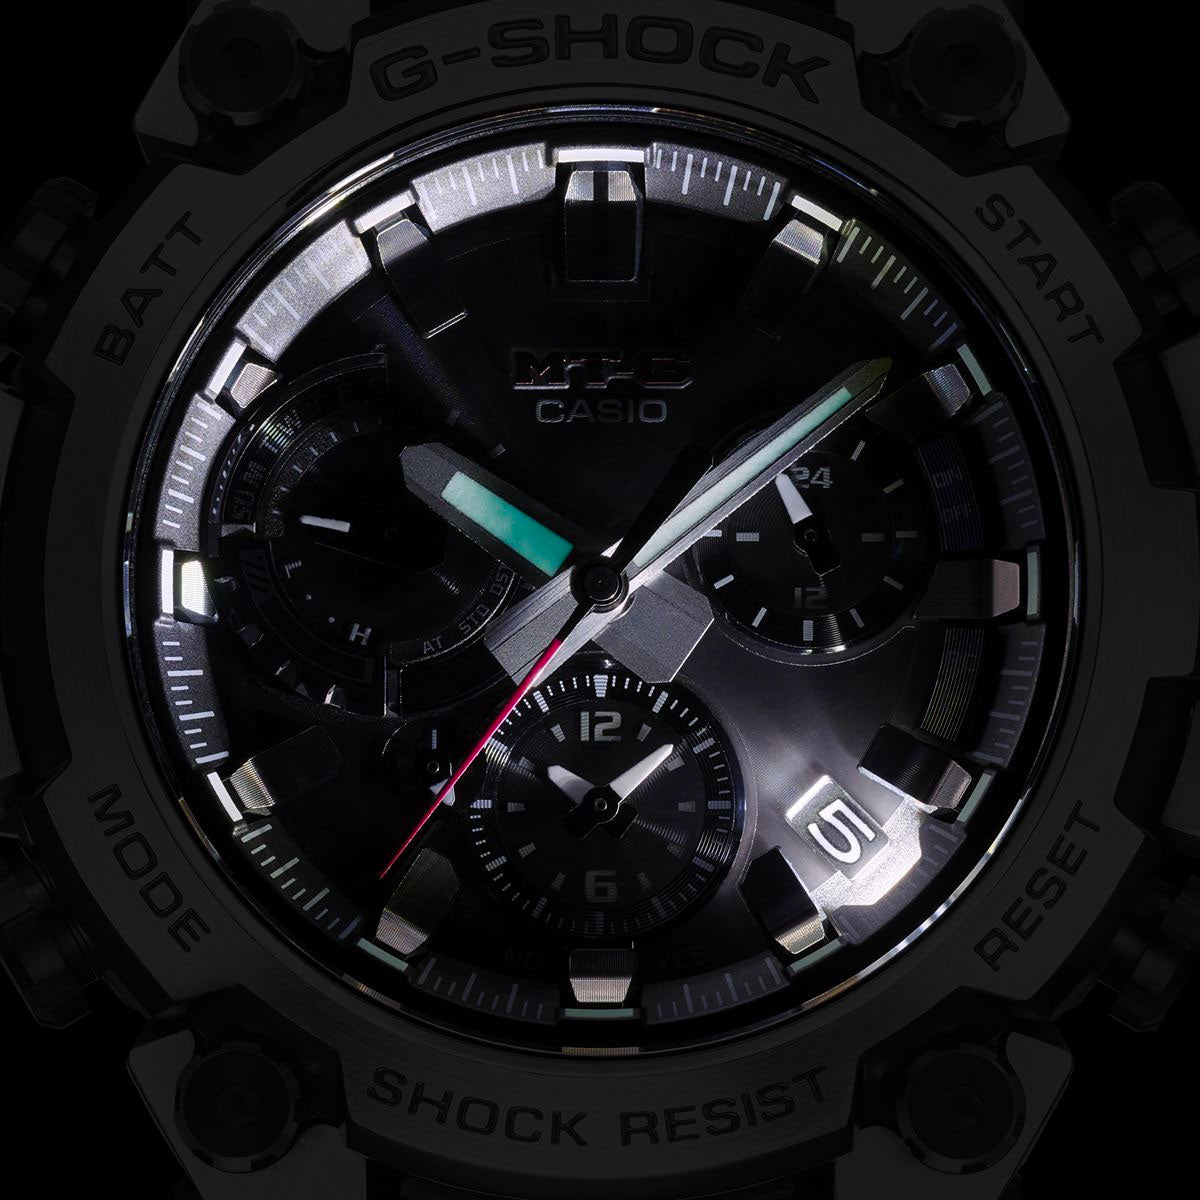 MT-G G-SHOCK 電波 ソーラー 電波時計 カシオ Gショック CASIO 腕時計 メンズ スマートフォンリンク タフソーラー MTG-B3000D-1AJF